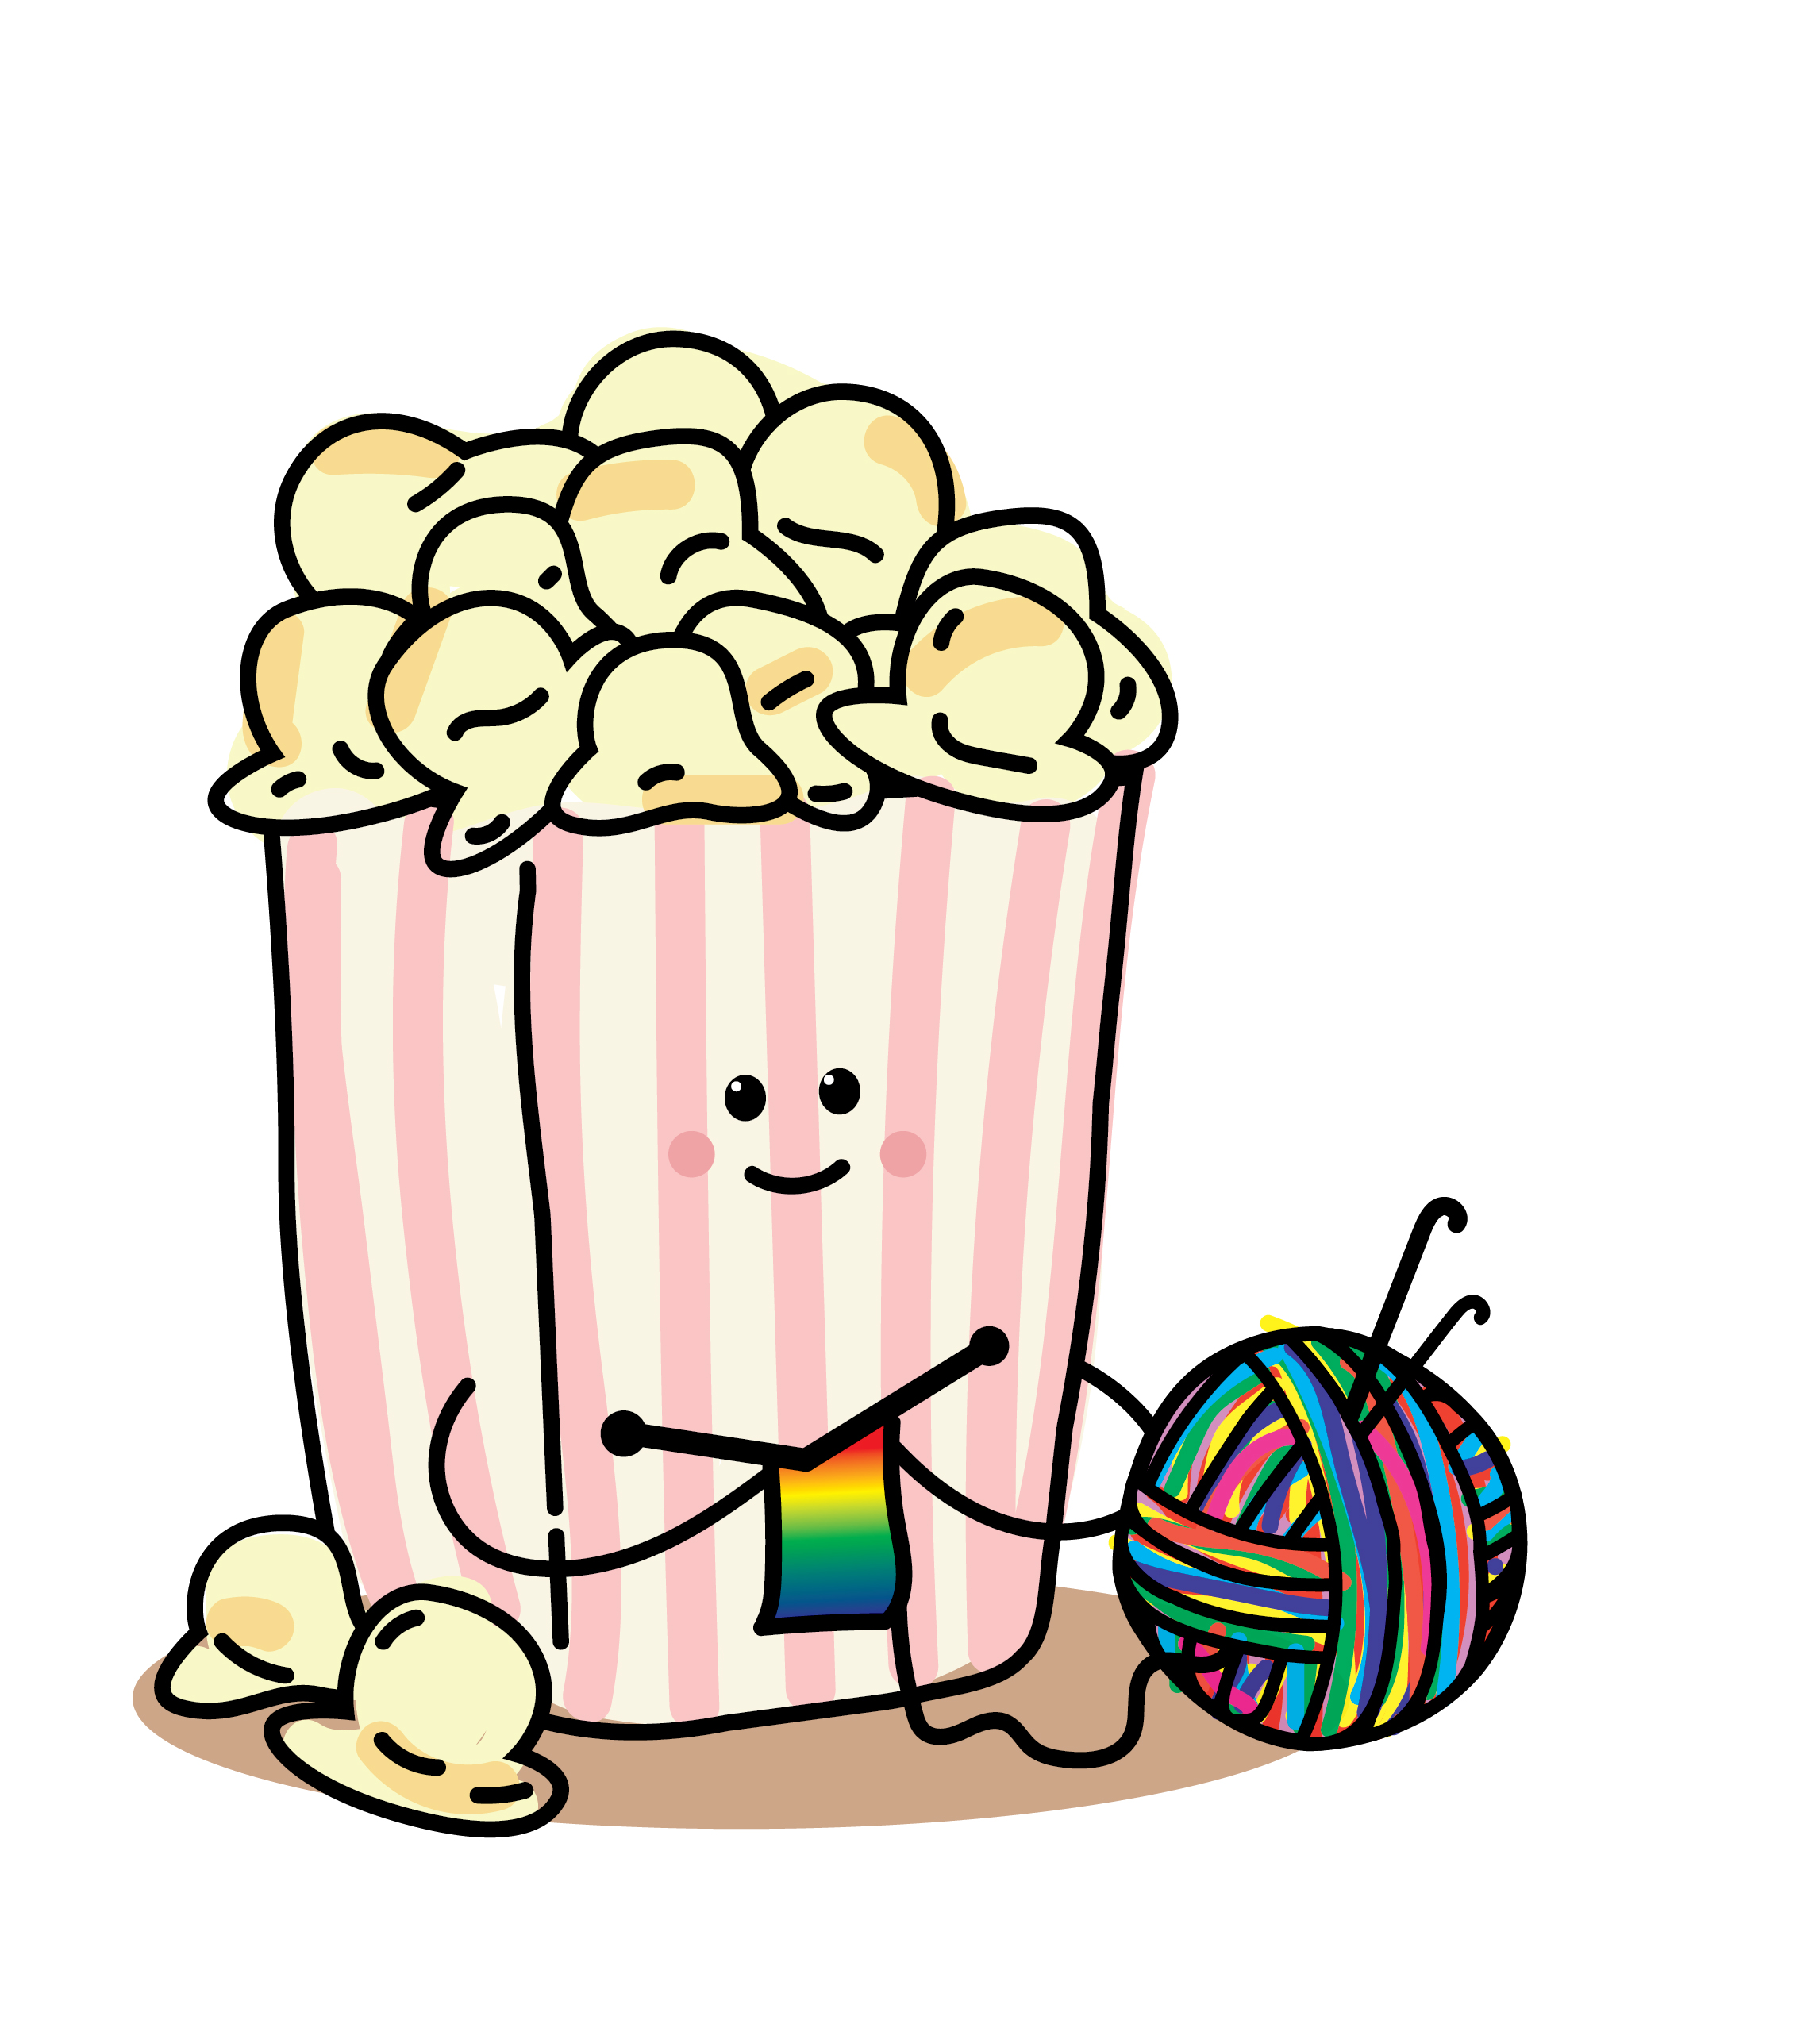 Cartoon style bag of movie popcorn crafting with rainbow yarn